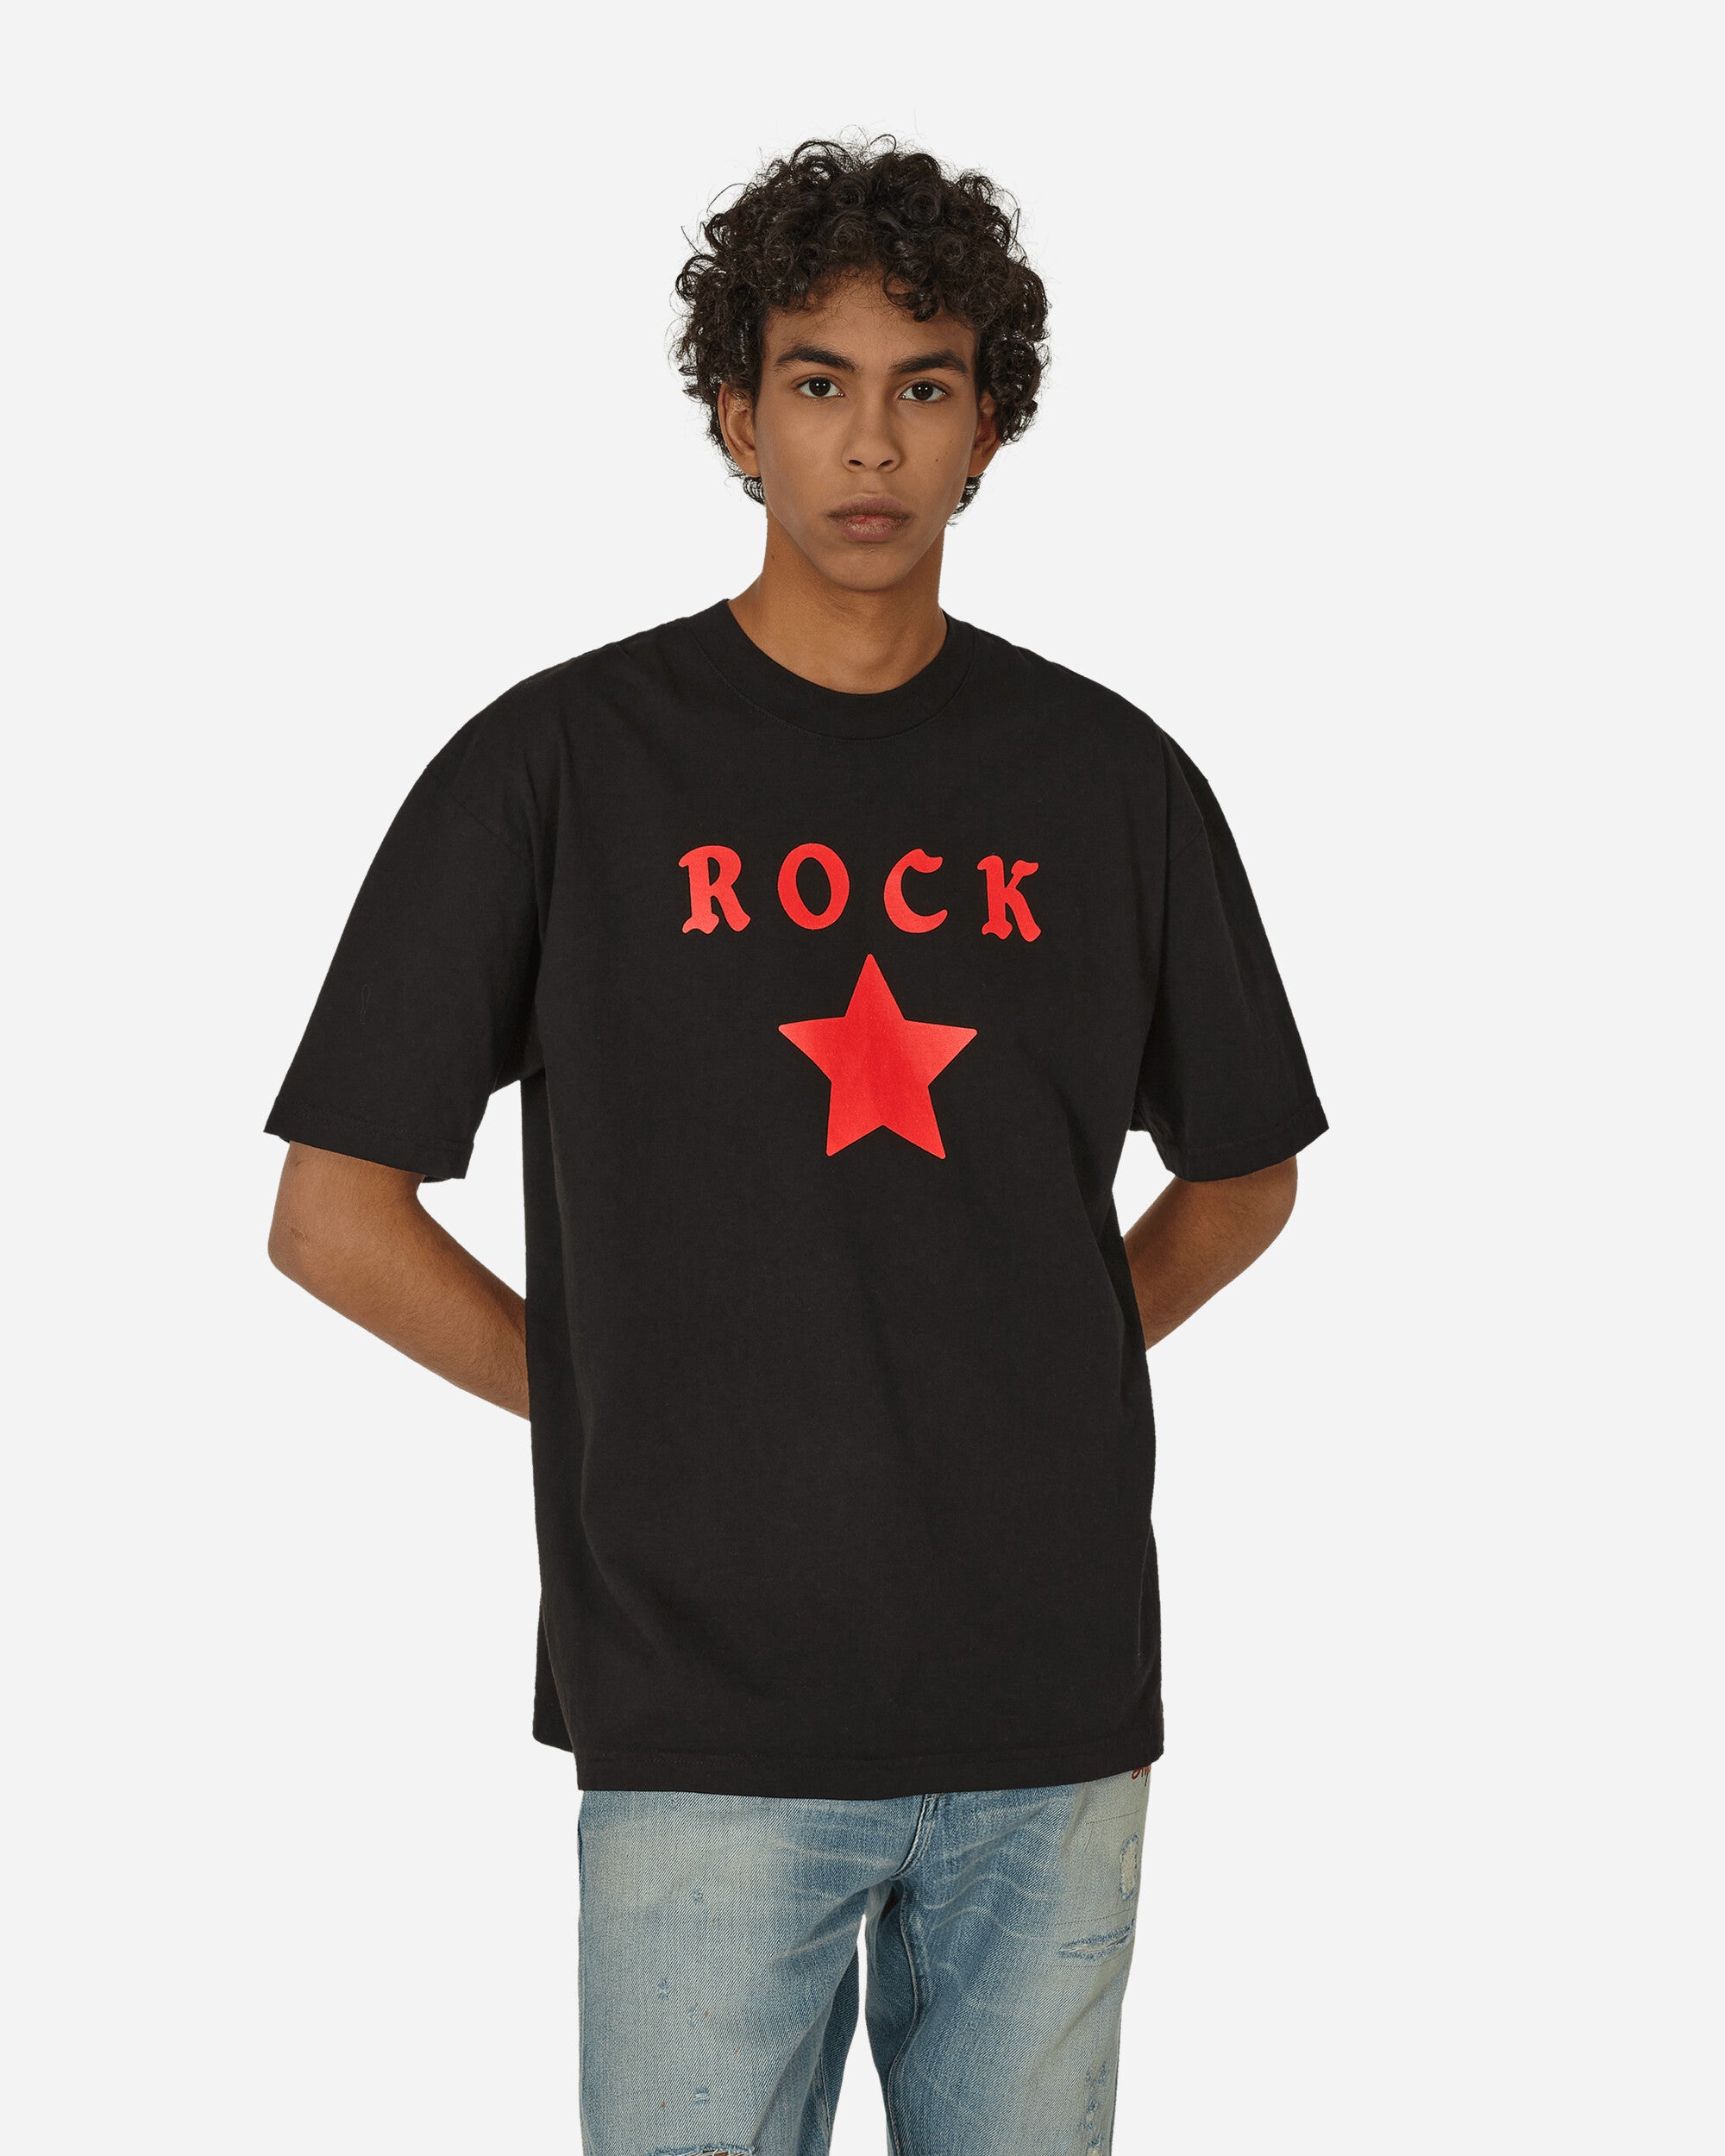 New ROCKSTAR MADE T-Shirt oversized t shirts Short sleeve tee mens t shirts